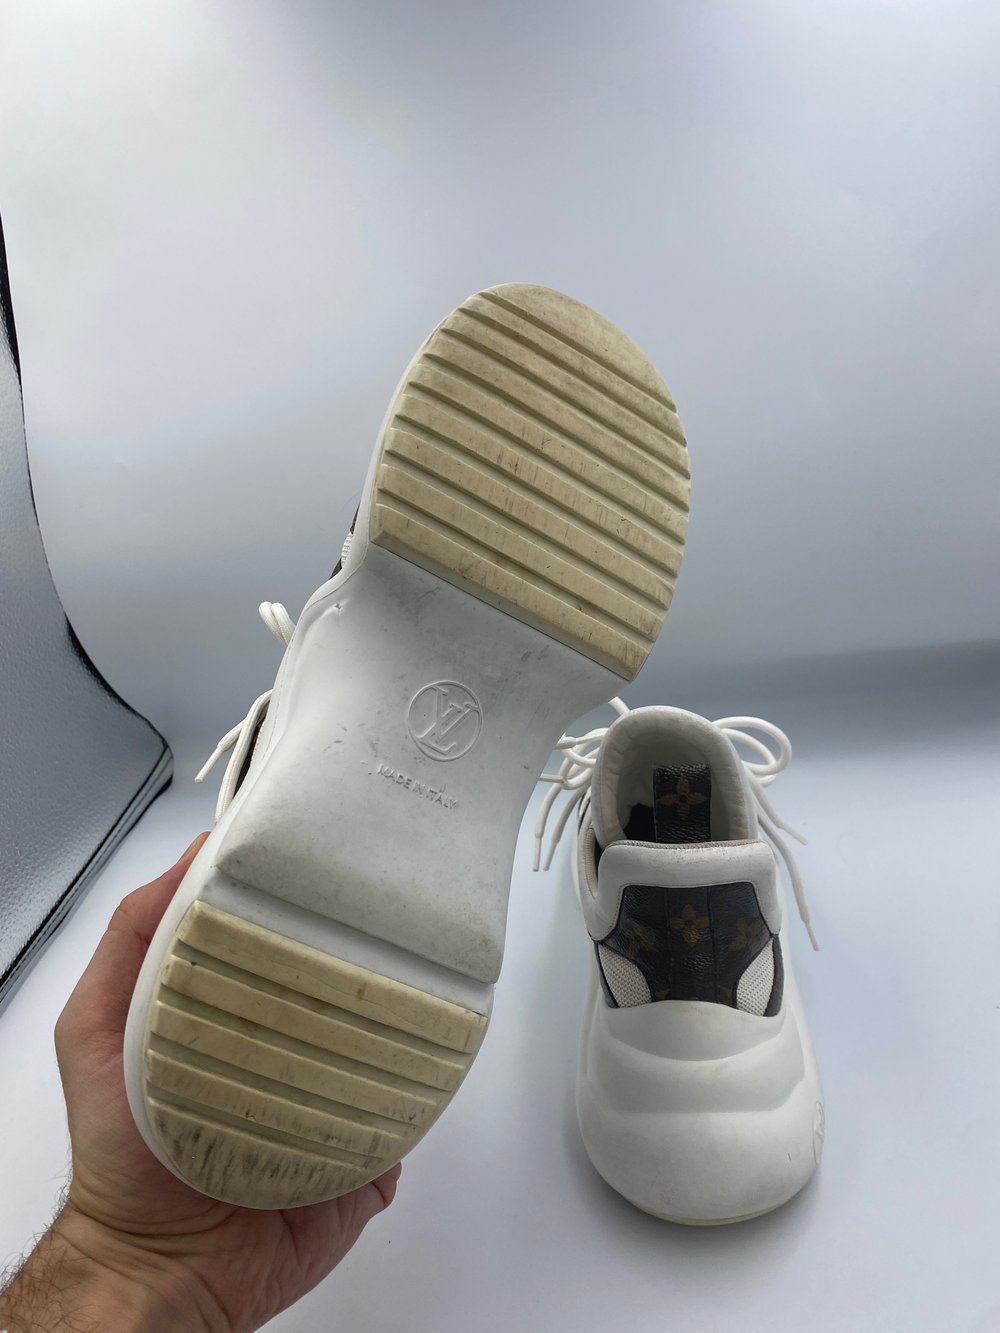 NIB Louis Vuitton Archlight Sneaker in White/Monogram size 39